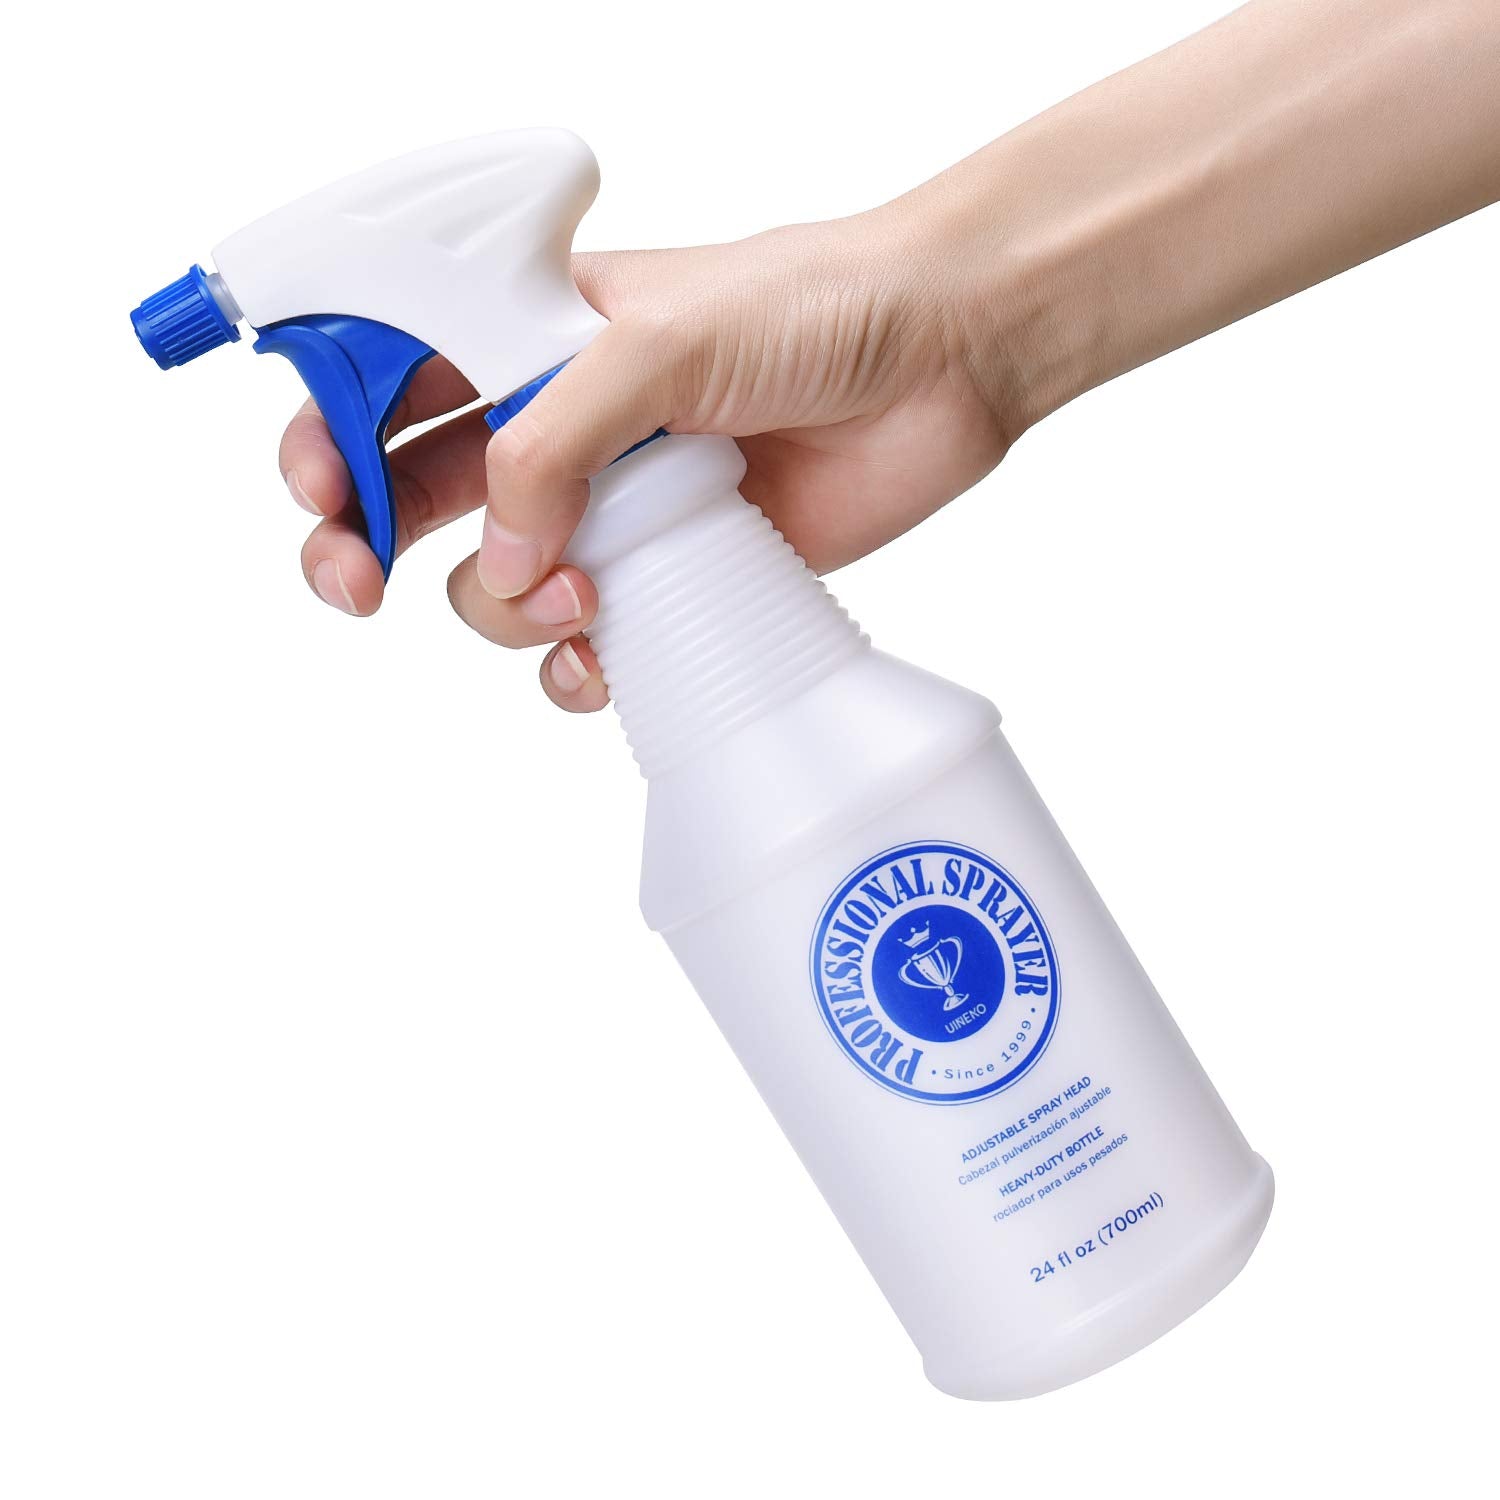 Plastic Spray Bottle 4 Pack 24 Oz (Upgraded Sprayer) All-Purpose